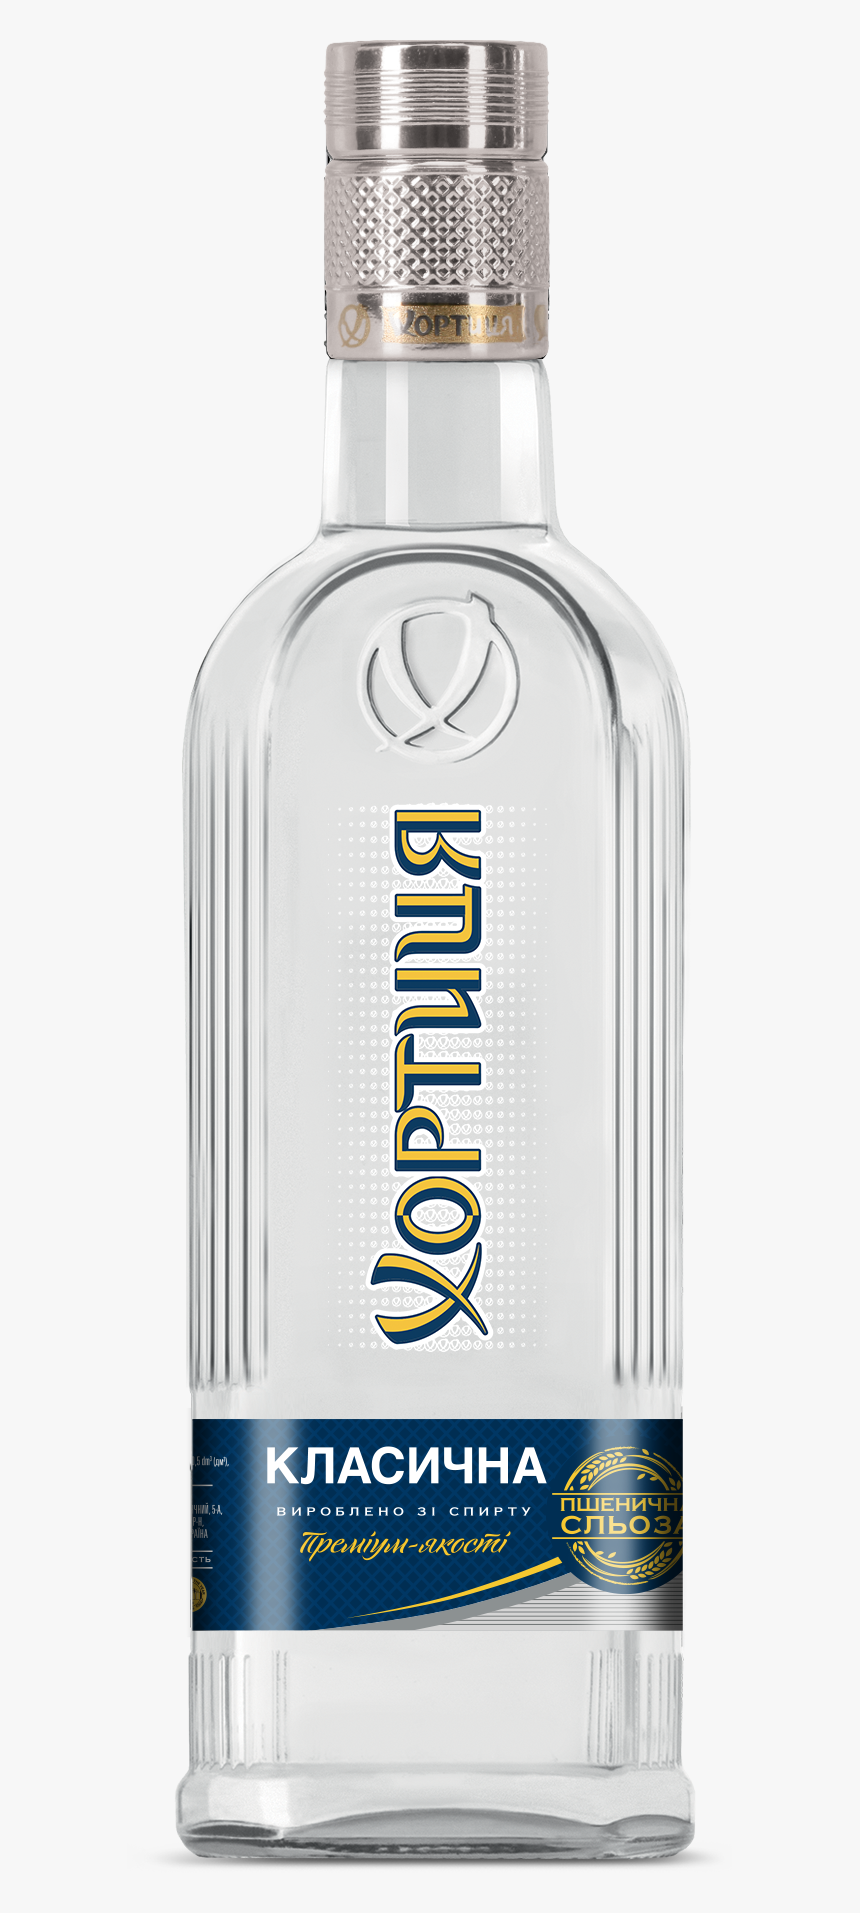 Vodka Png - Хортица Классическая Хортица Водка, Transparent Png, Free Download